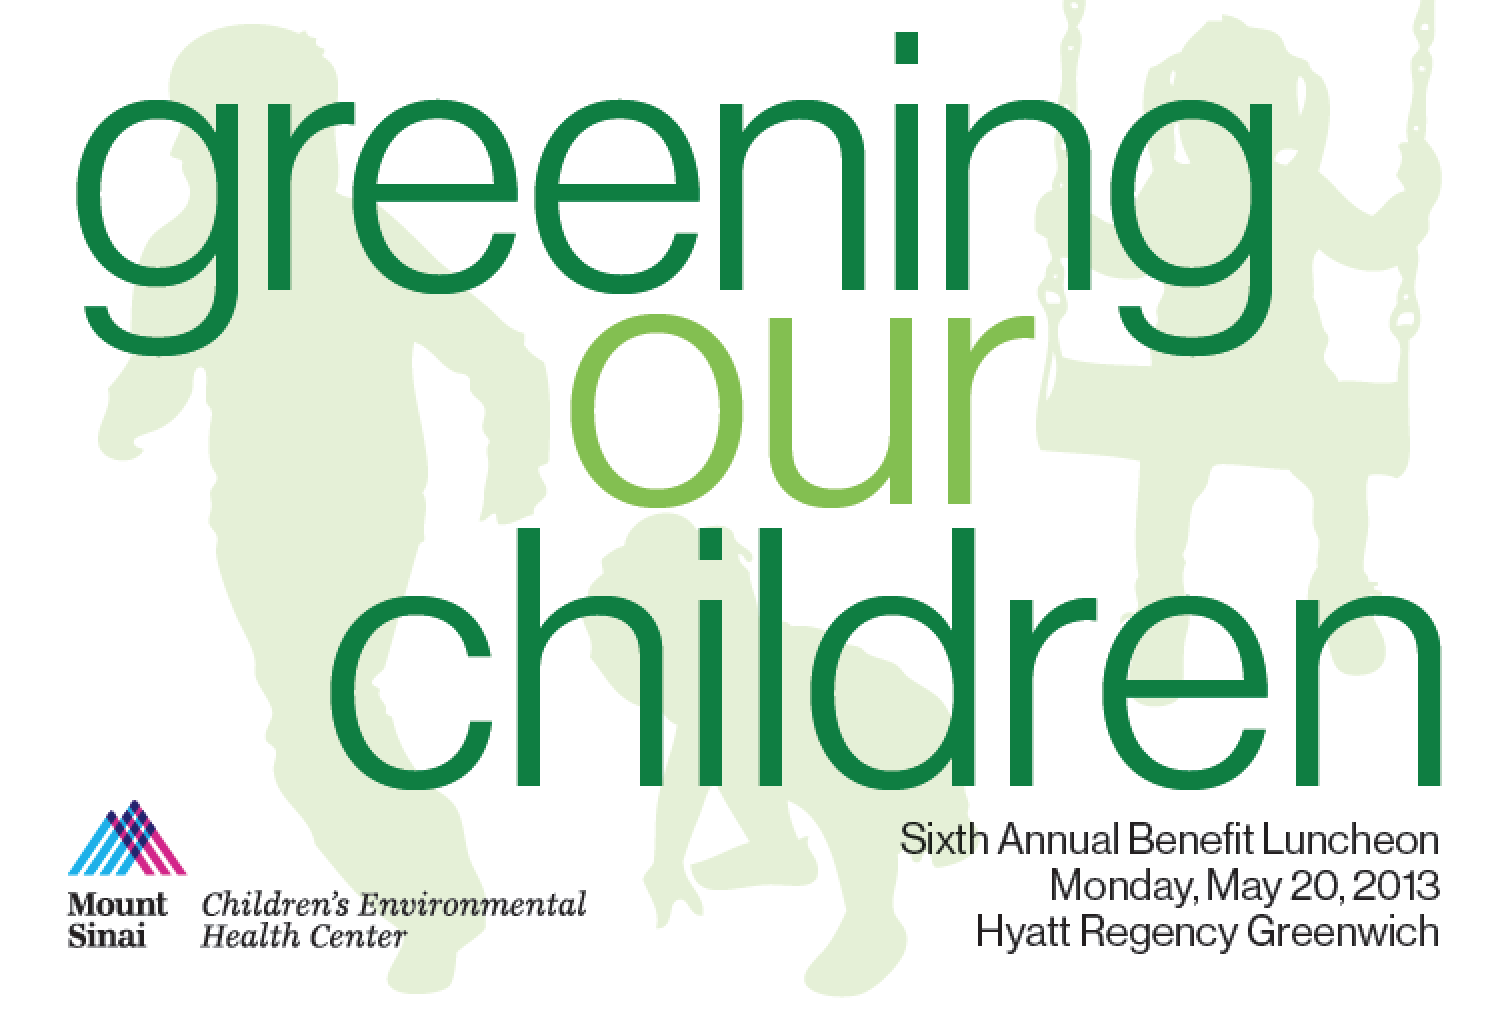 Mr. Sinai Greening Our Children